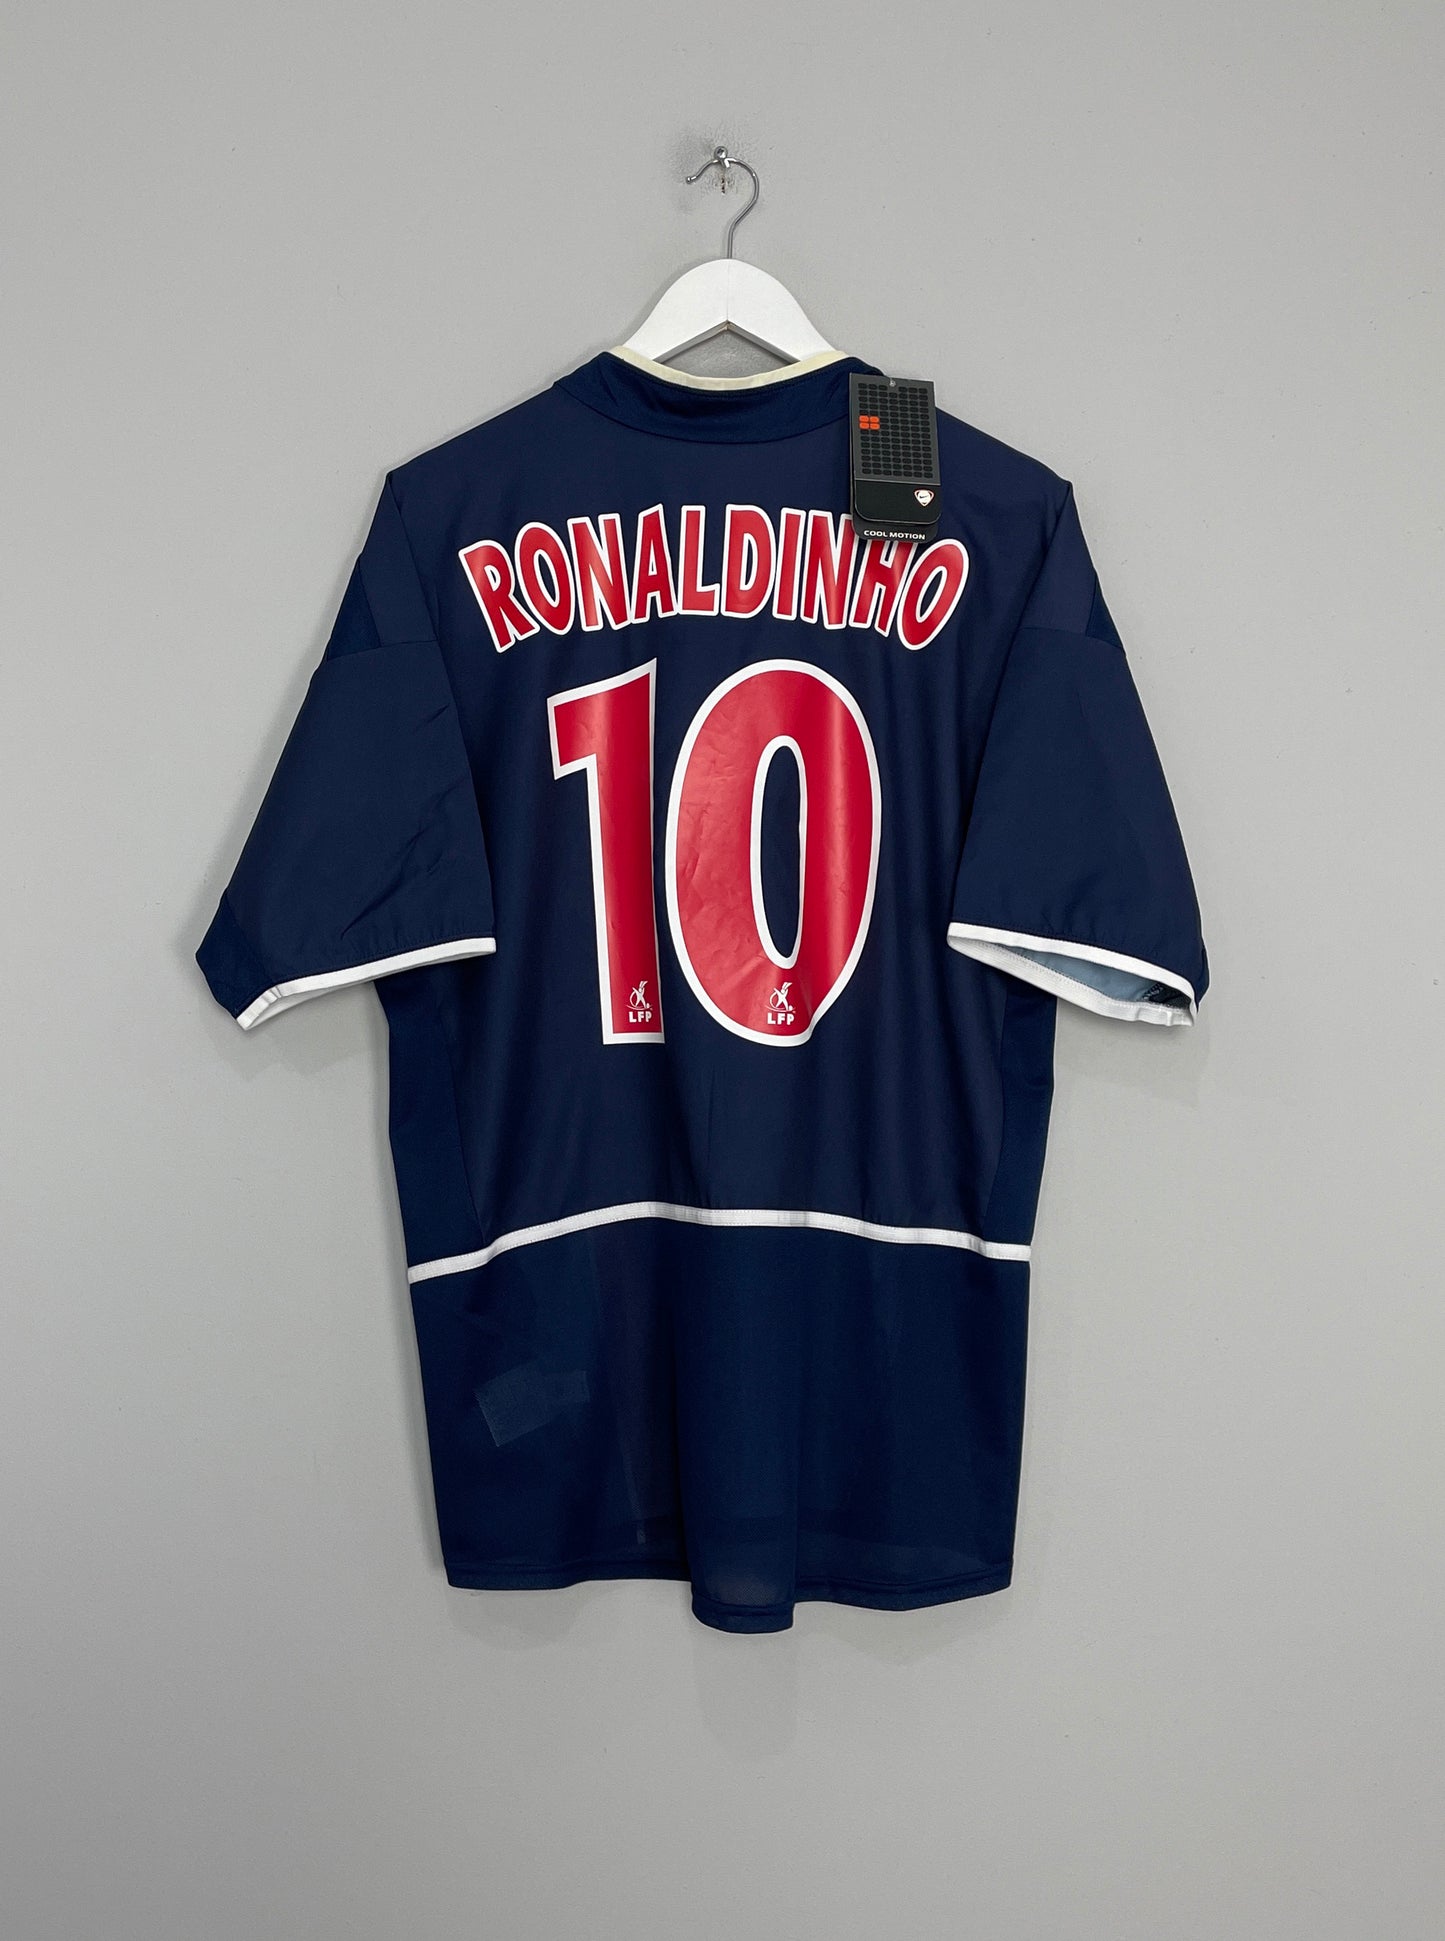 Image of the PSG Ronaldinho shirt from the 2002/04 season